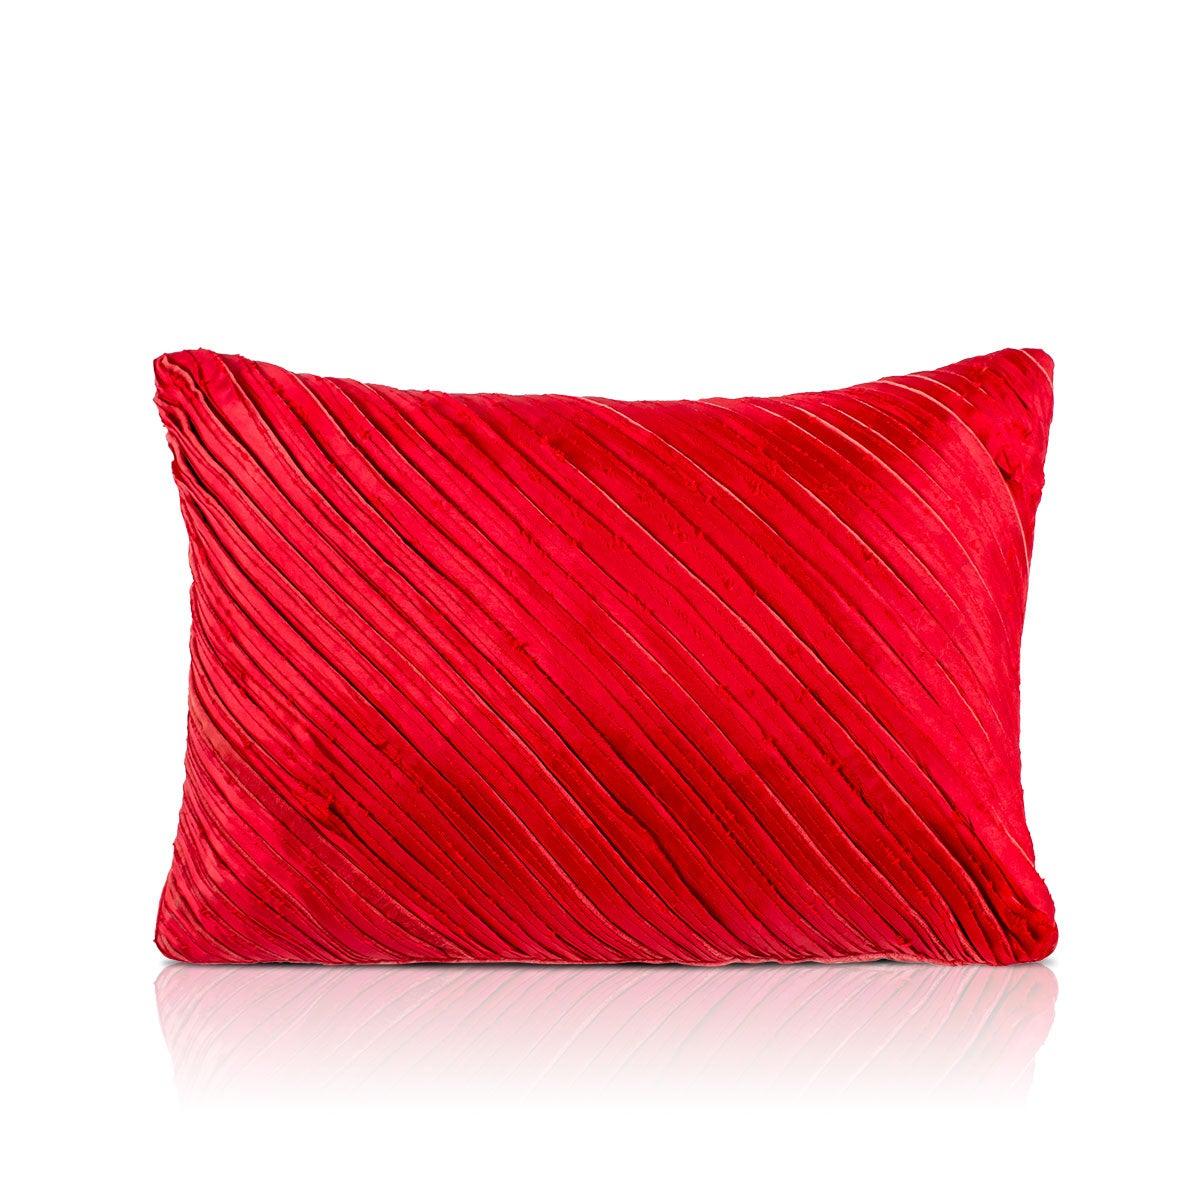 Aban Claret 14 In X 20 In Red Cushion - Home4u